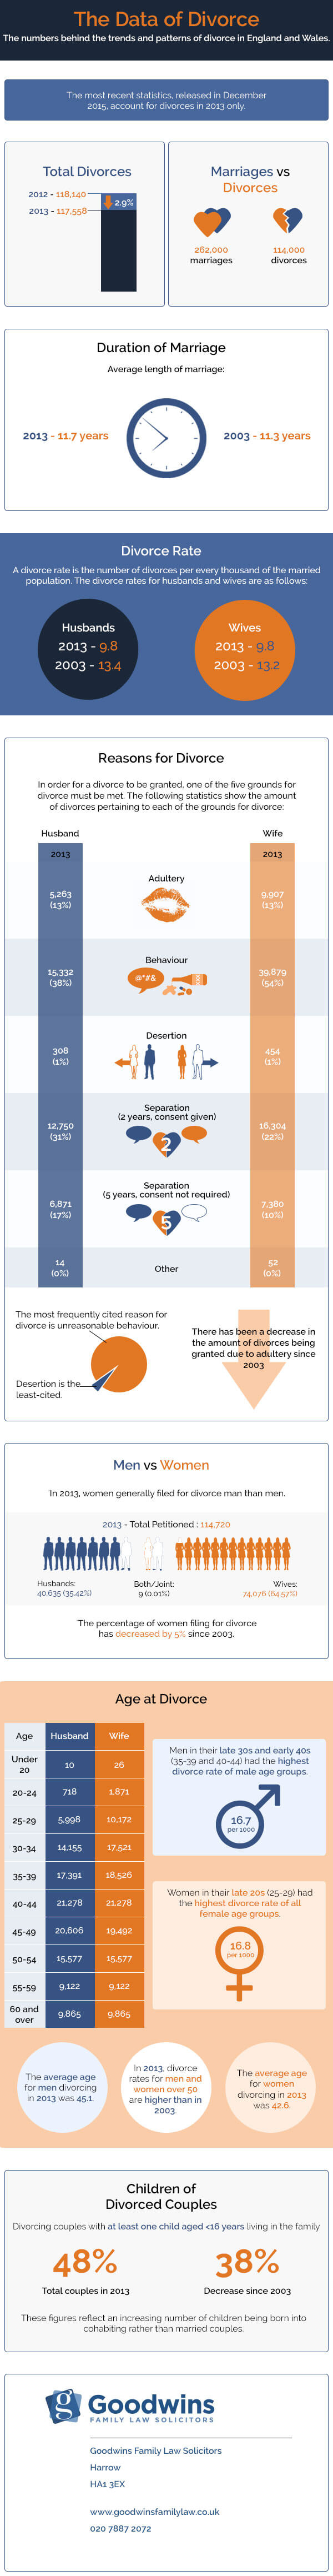 data-of-divorce-infographic-plaza